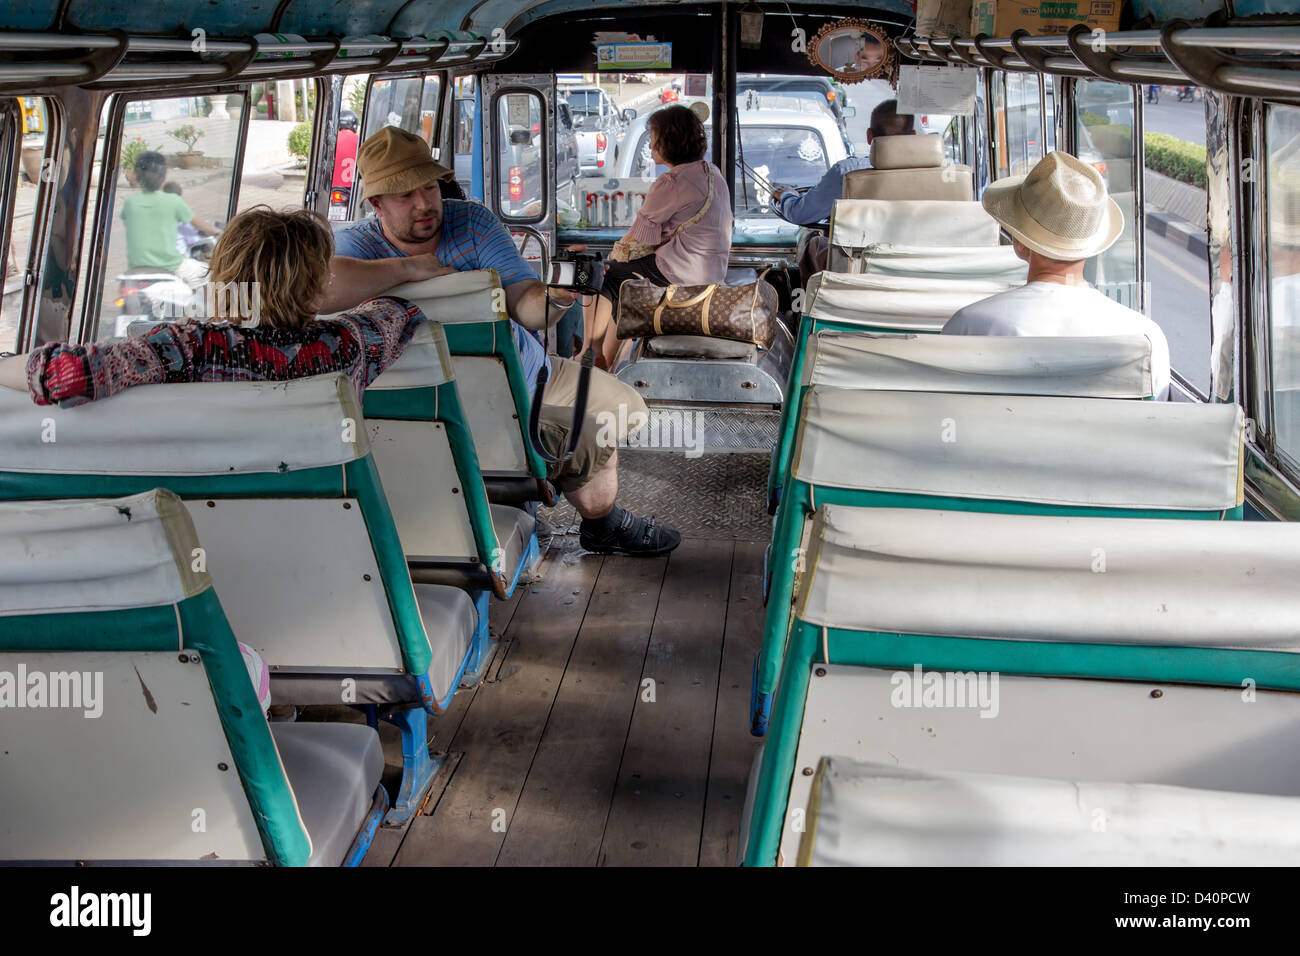 Passengers on the bus Stock Photo